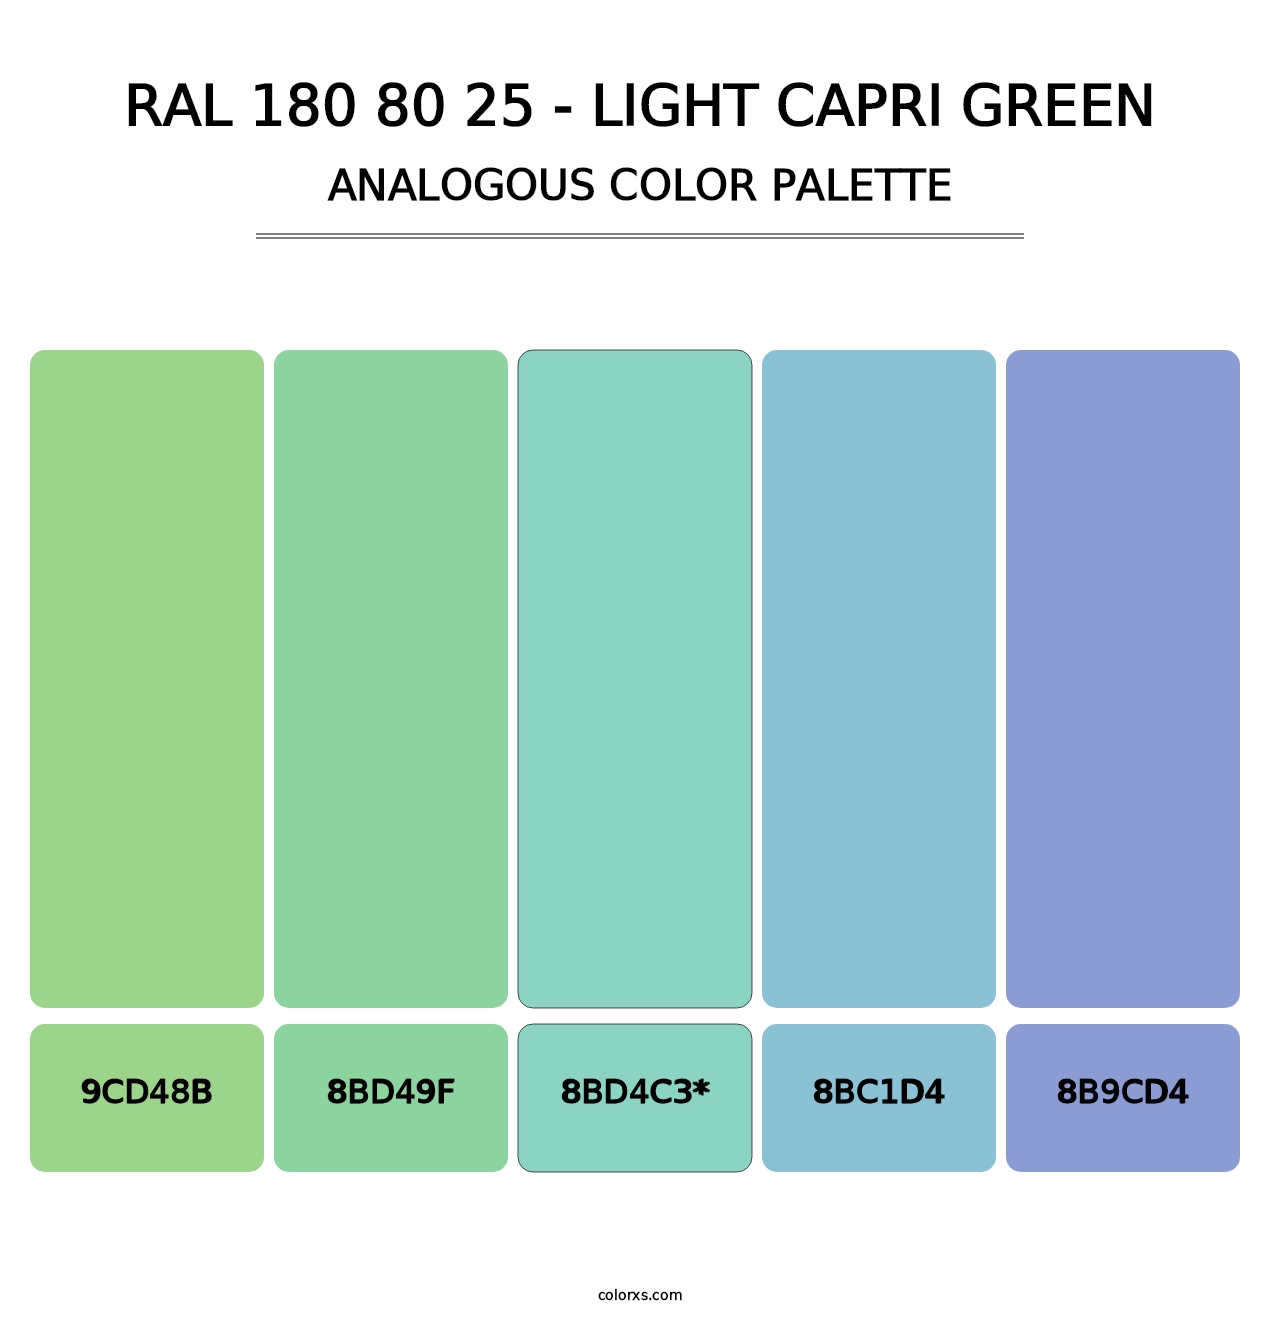 RAL 180 80 25 - Light Capri Green - Analogous Color Palette